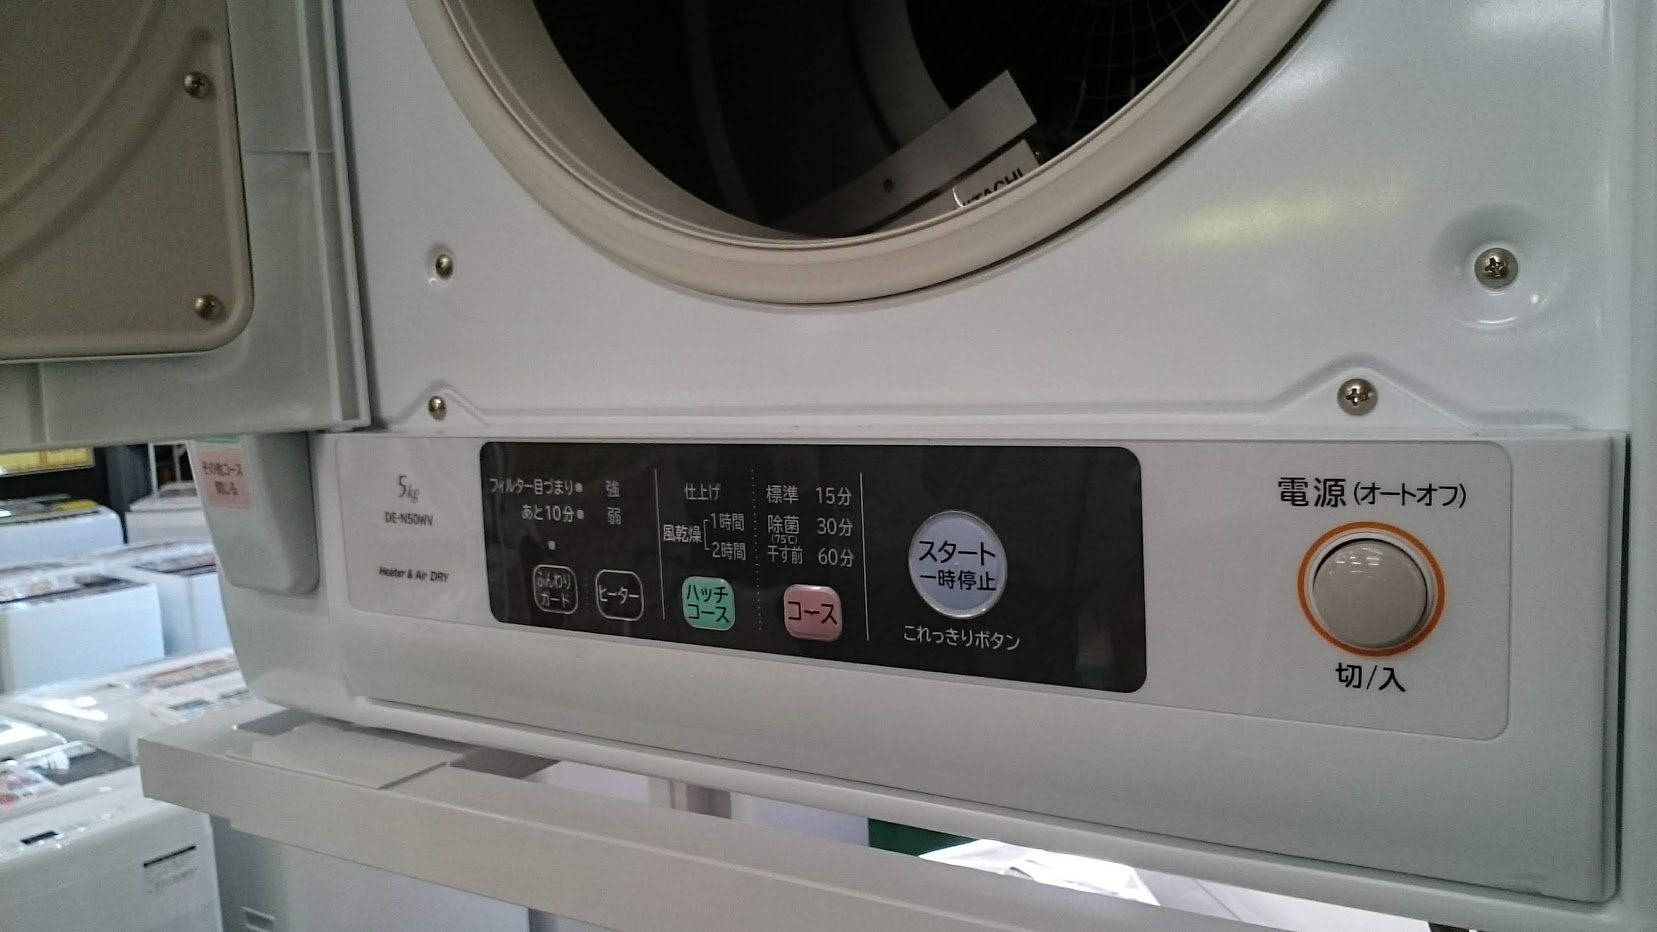 HITACHI 5.0kg 電気 衣類乾燥機 DE-N50WV 買取いたしました|愛品倶楽部柏店